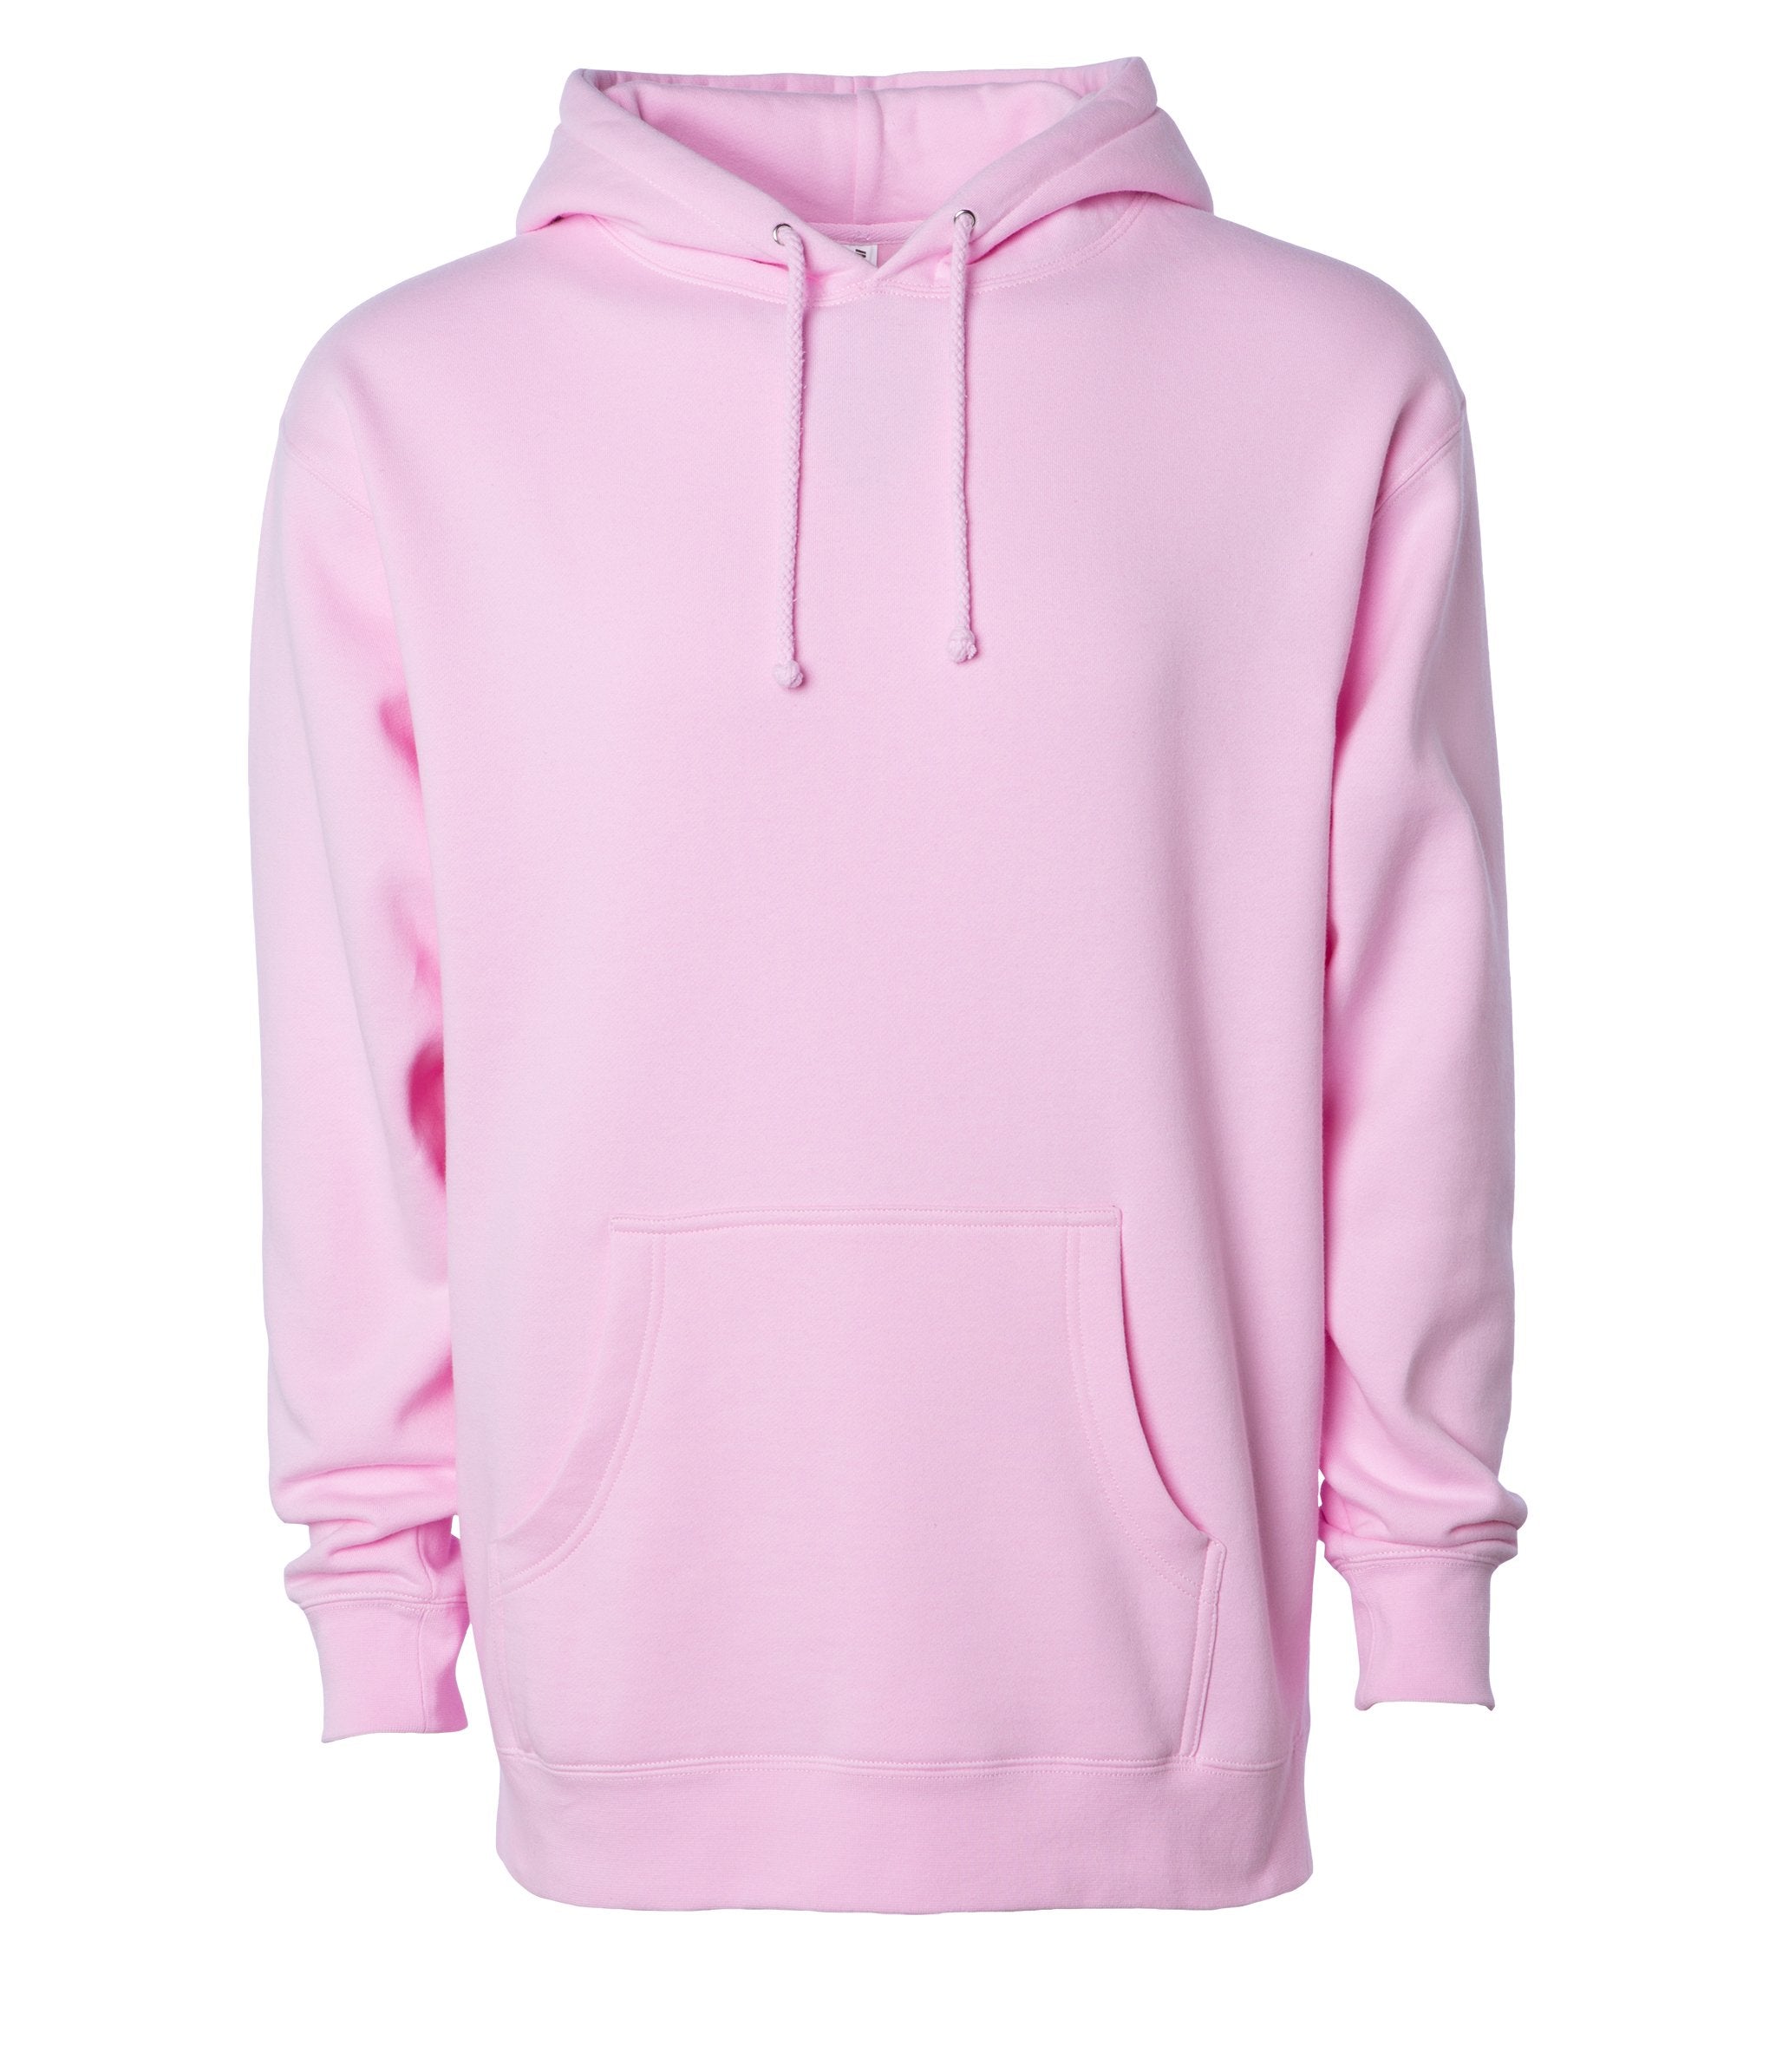 IND4000 Men's Heavyweight Hooded Pullover Sweatshirt in Light Pink